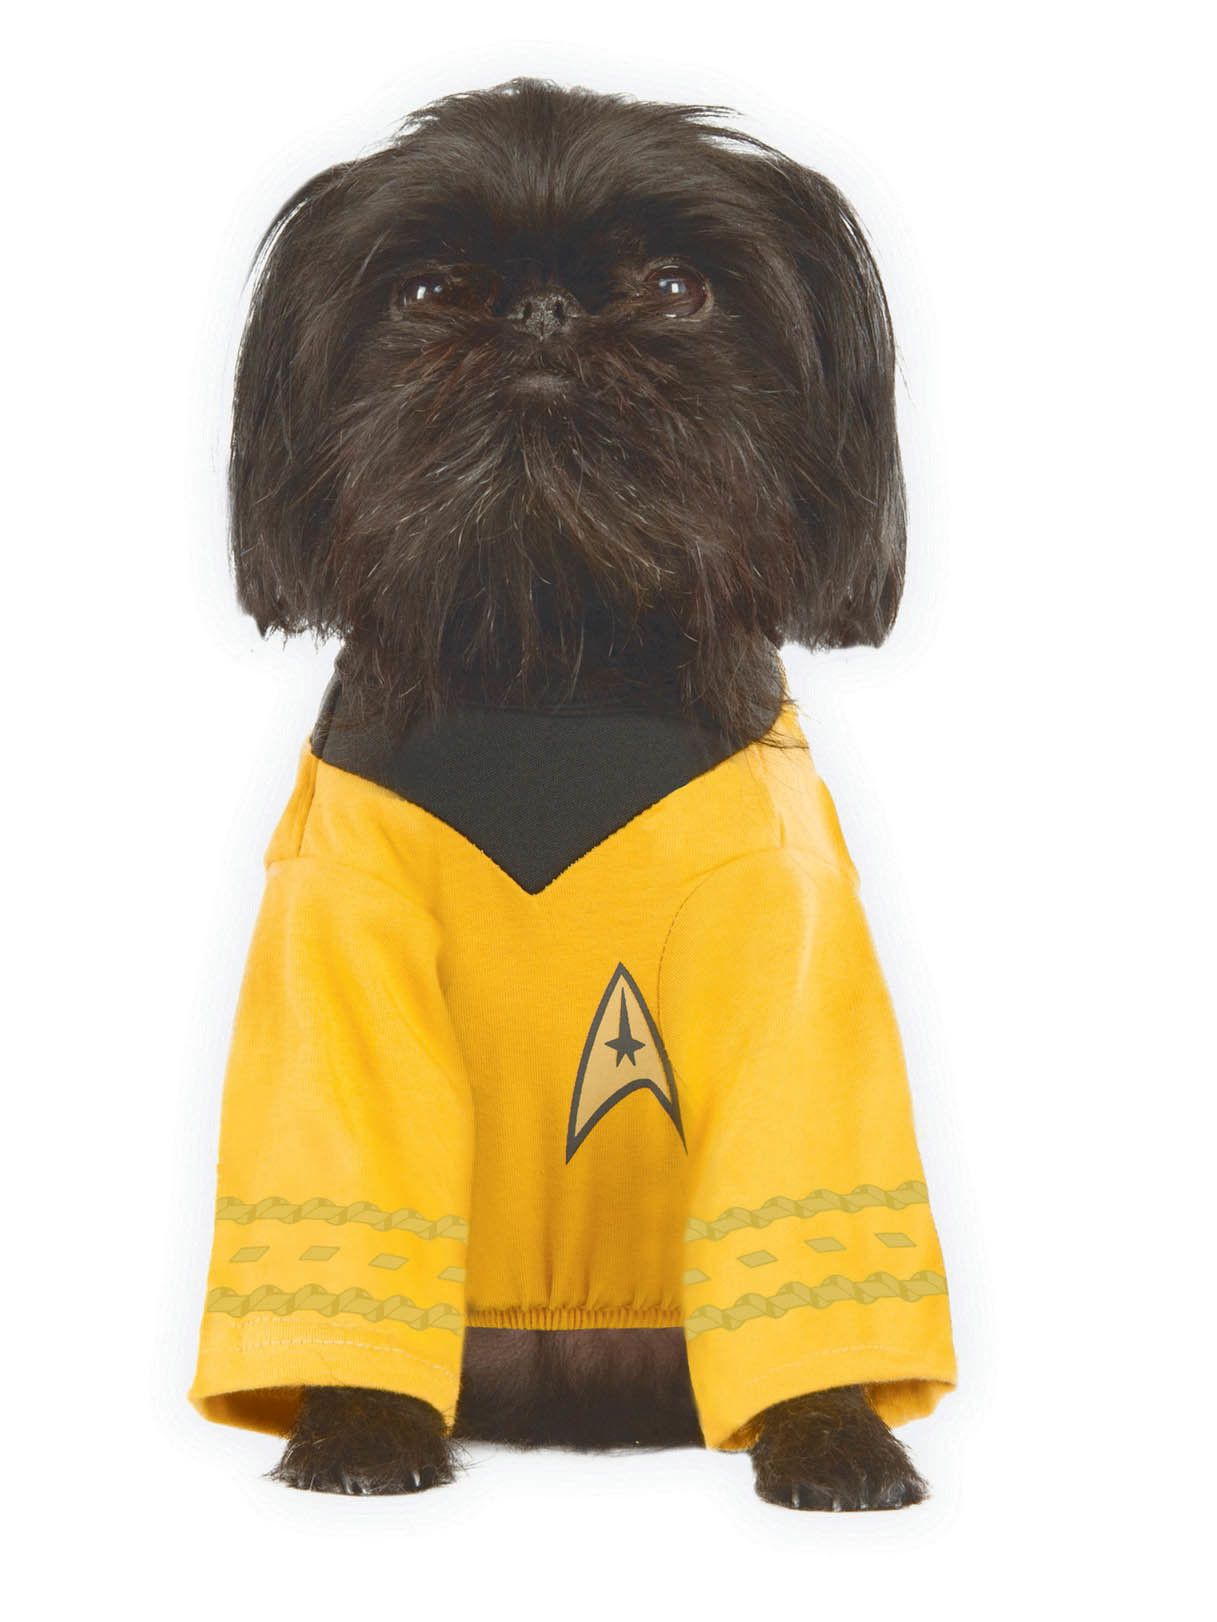 Pet's Star Trek Captain Kirk Costume - costumes.com